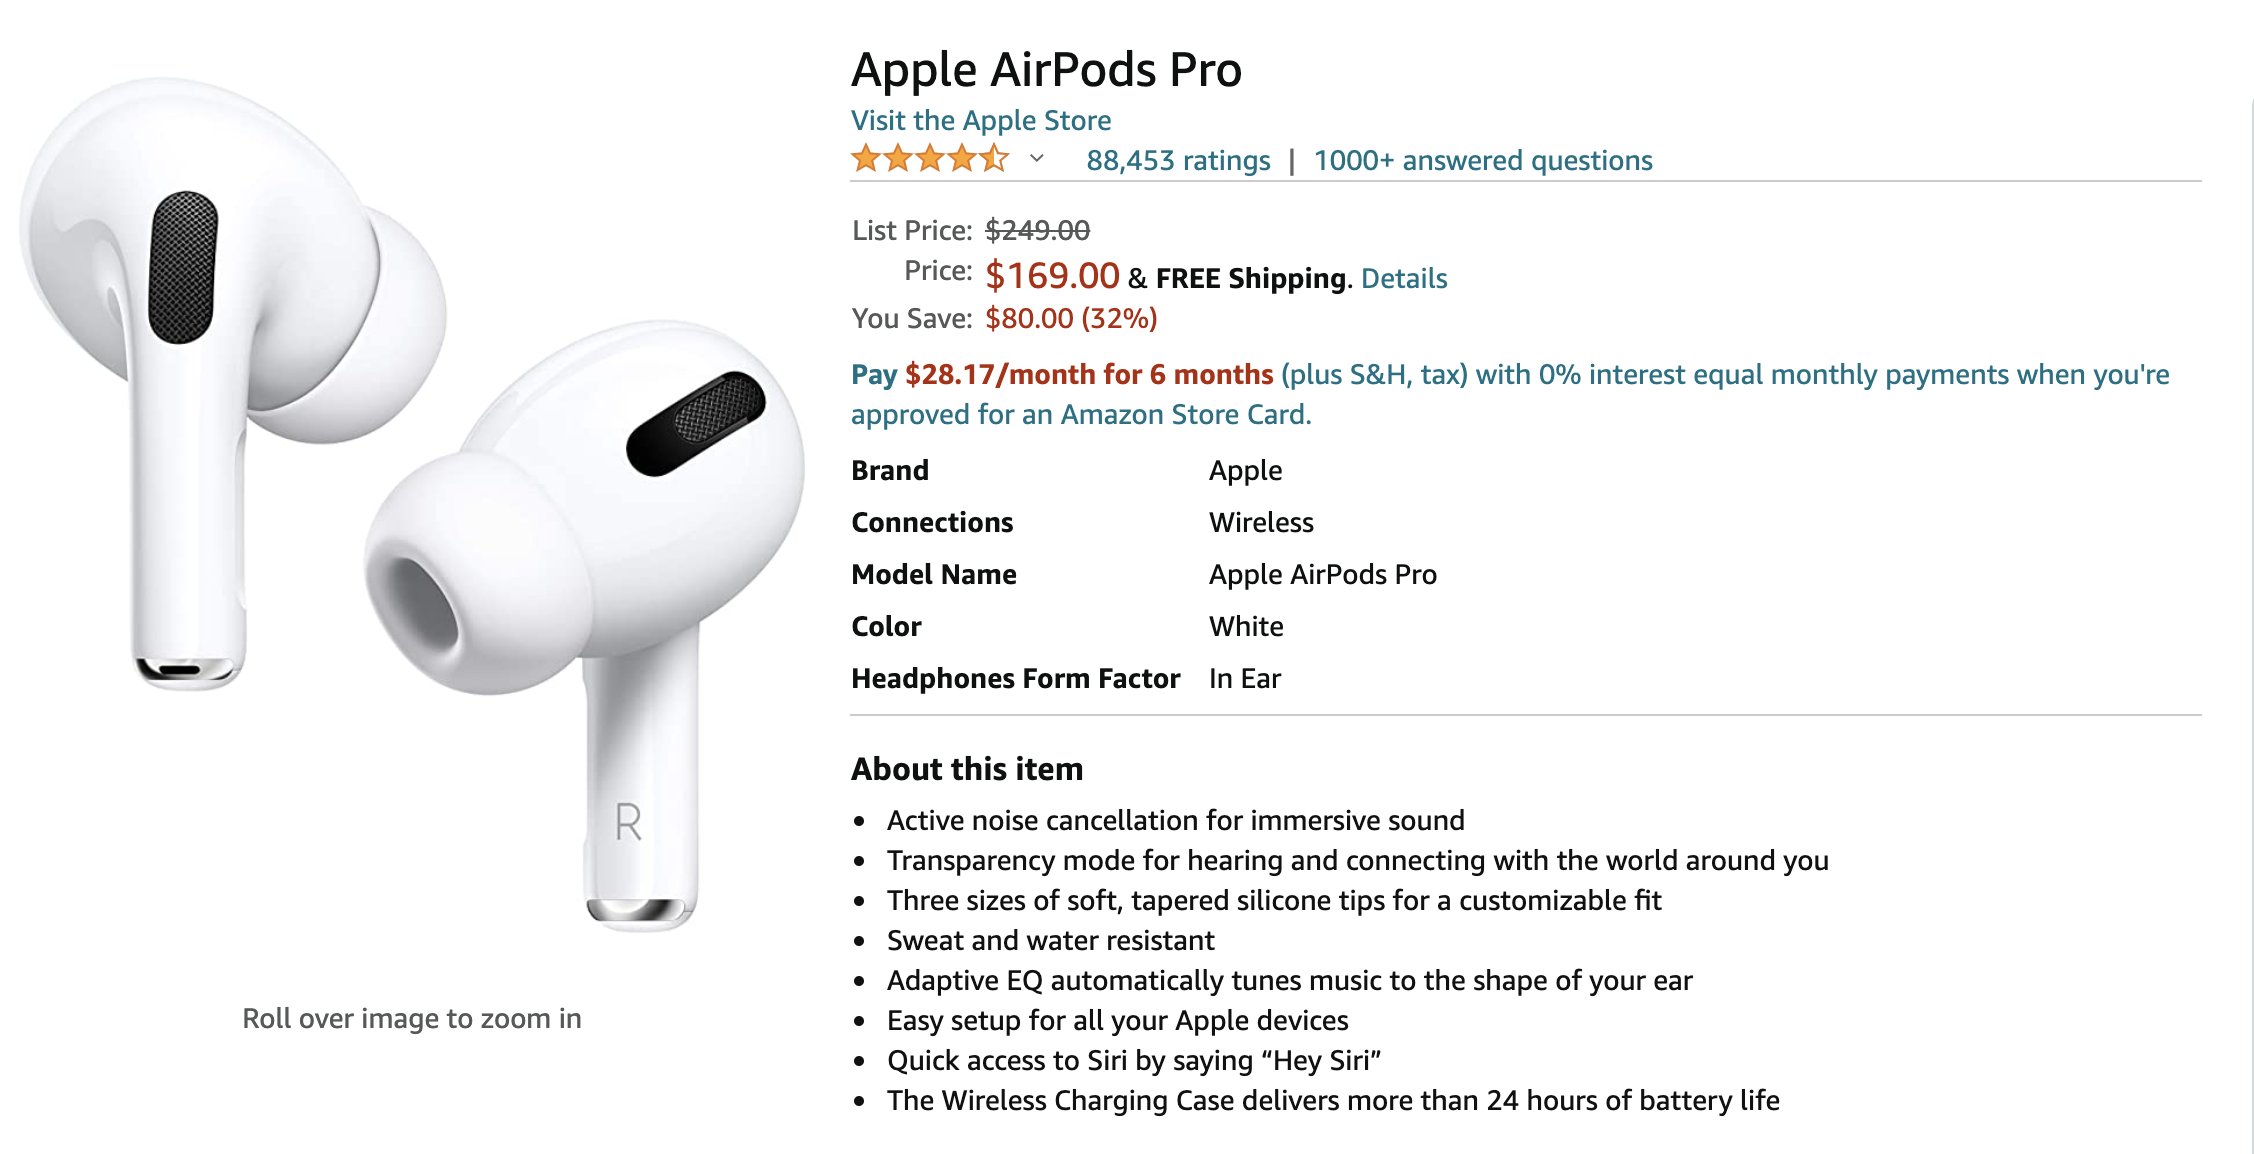 IGN Deals on Twitter: "Apple AirPods Pro are now $169 at Amazon  https://t.co/Vzx1znxNaN The Best Amazon Black Friday Deals:  https://t.co/hgWyLSkdNE https://t.co/Xuzir2DxZ8" / Twitter